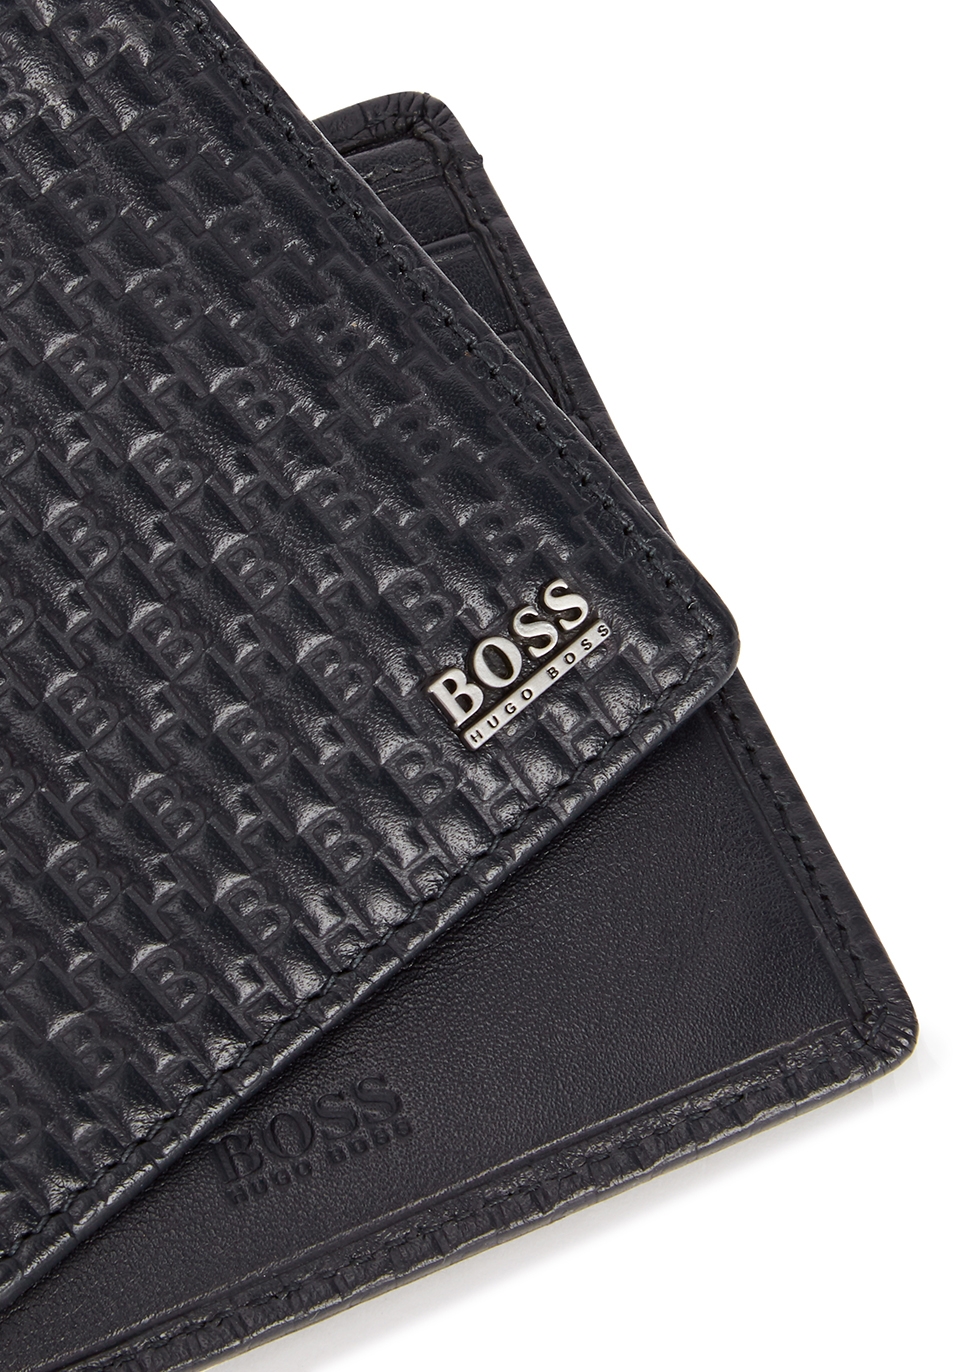 BOSS Crosstown navy leather wallet 